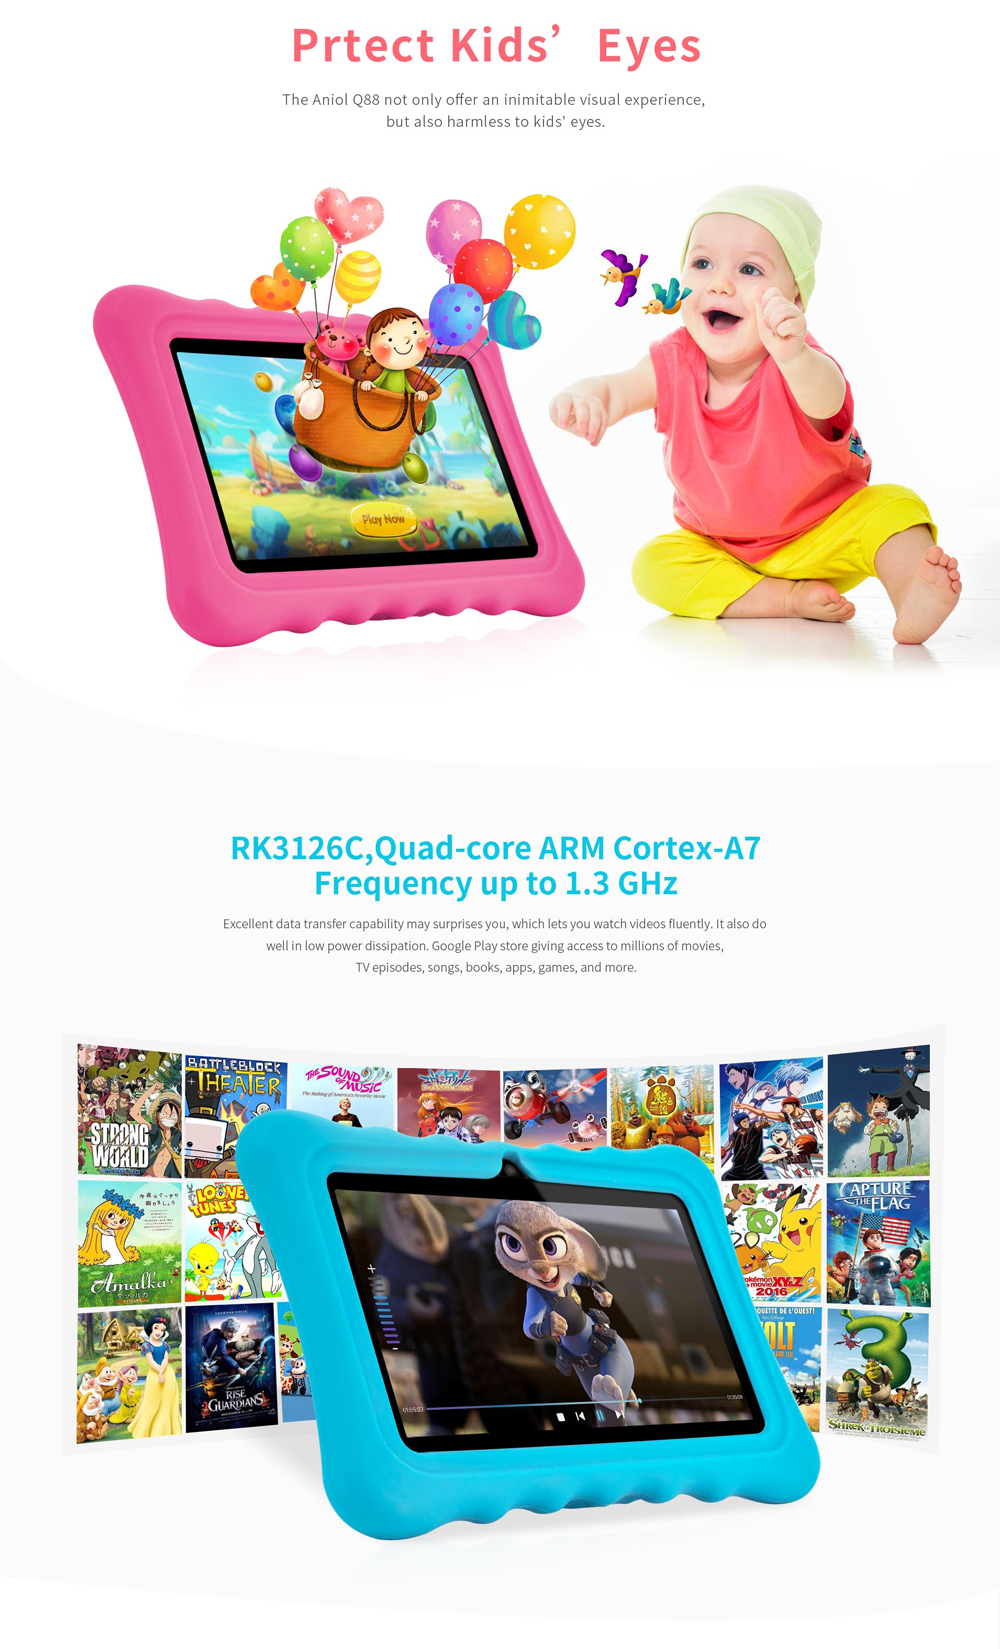 Ainol-Q88-RK3126C-13GHz-1GB-RAM-16GB-Android-71-OS-Kid-Tablet-Pink-1358465